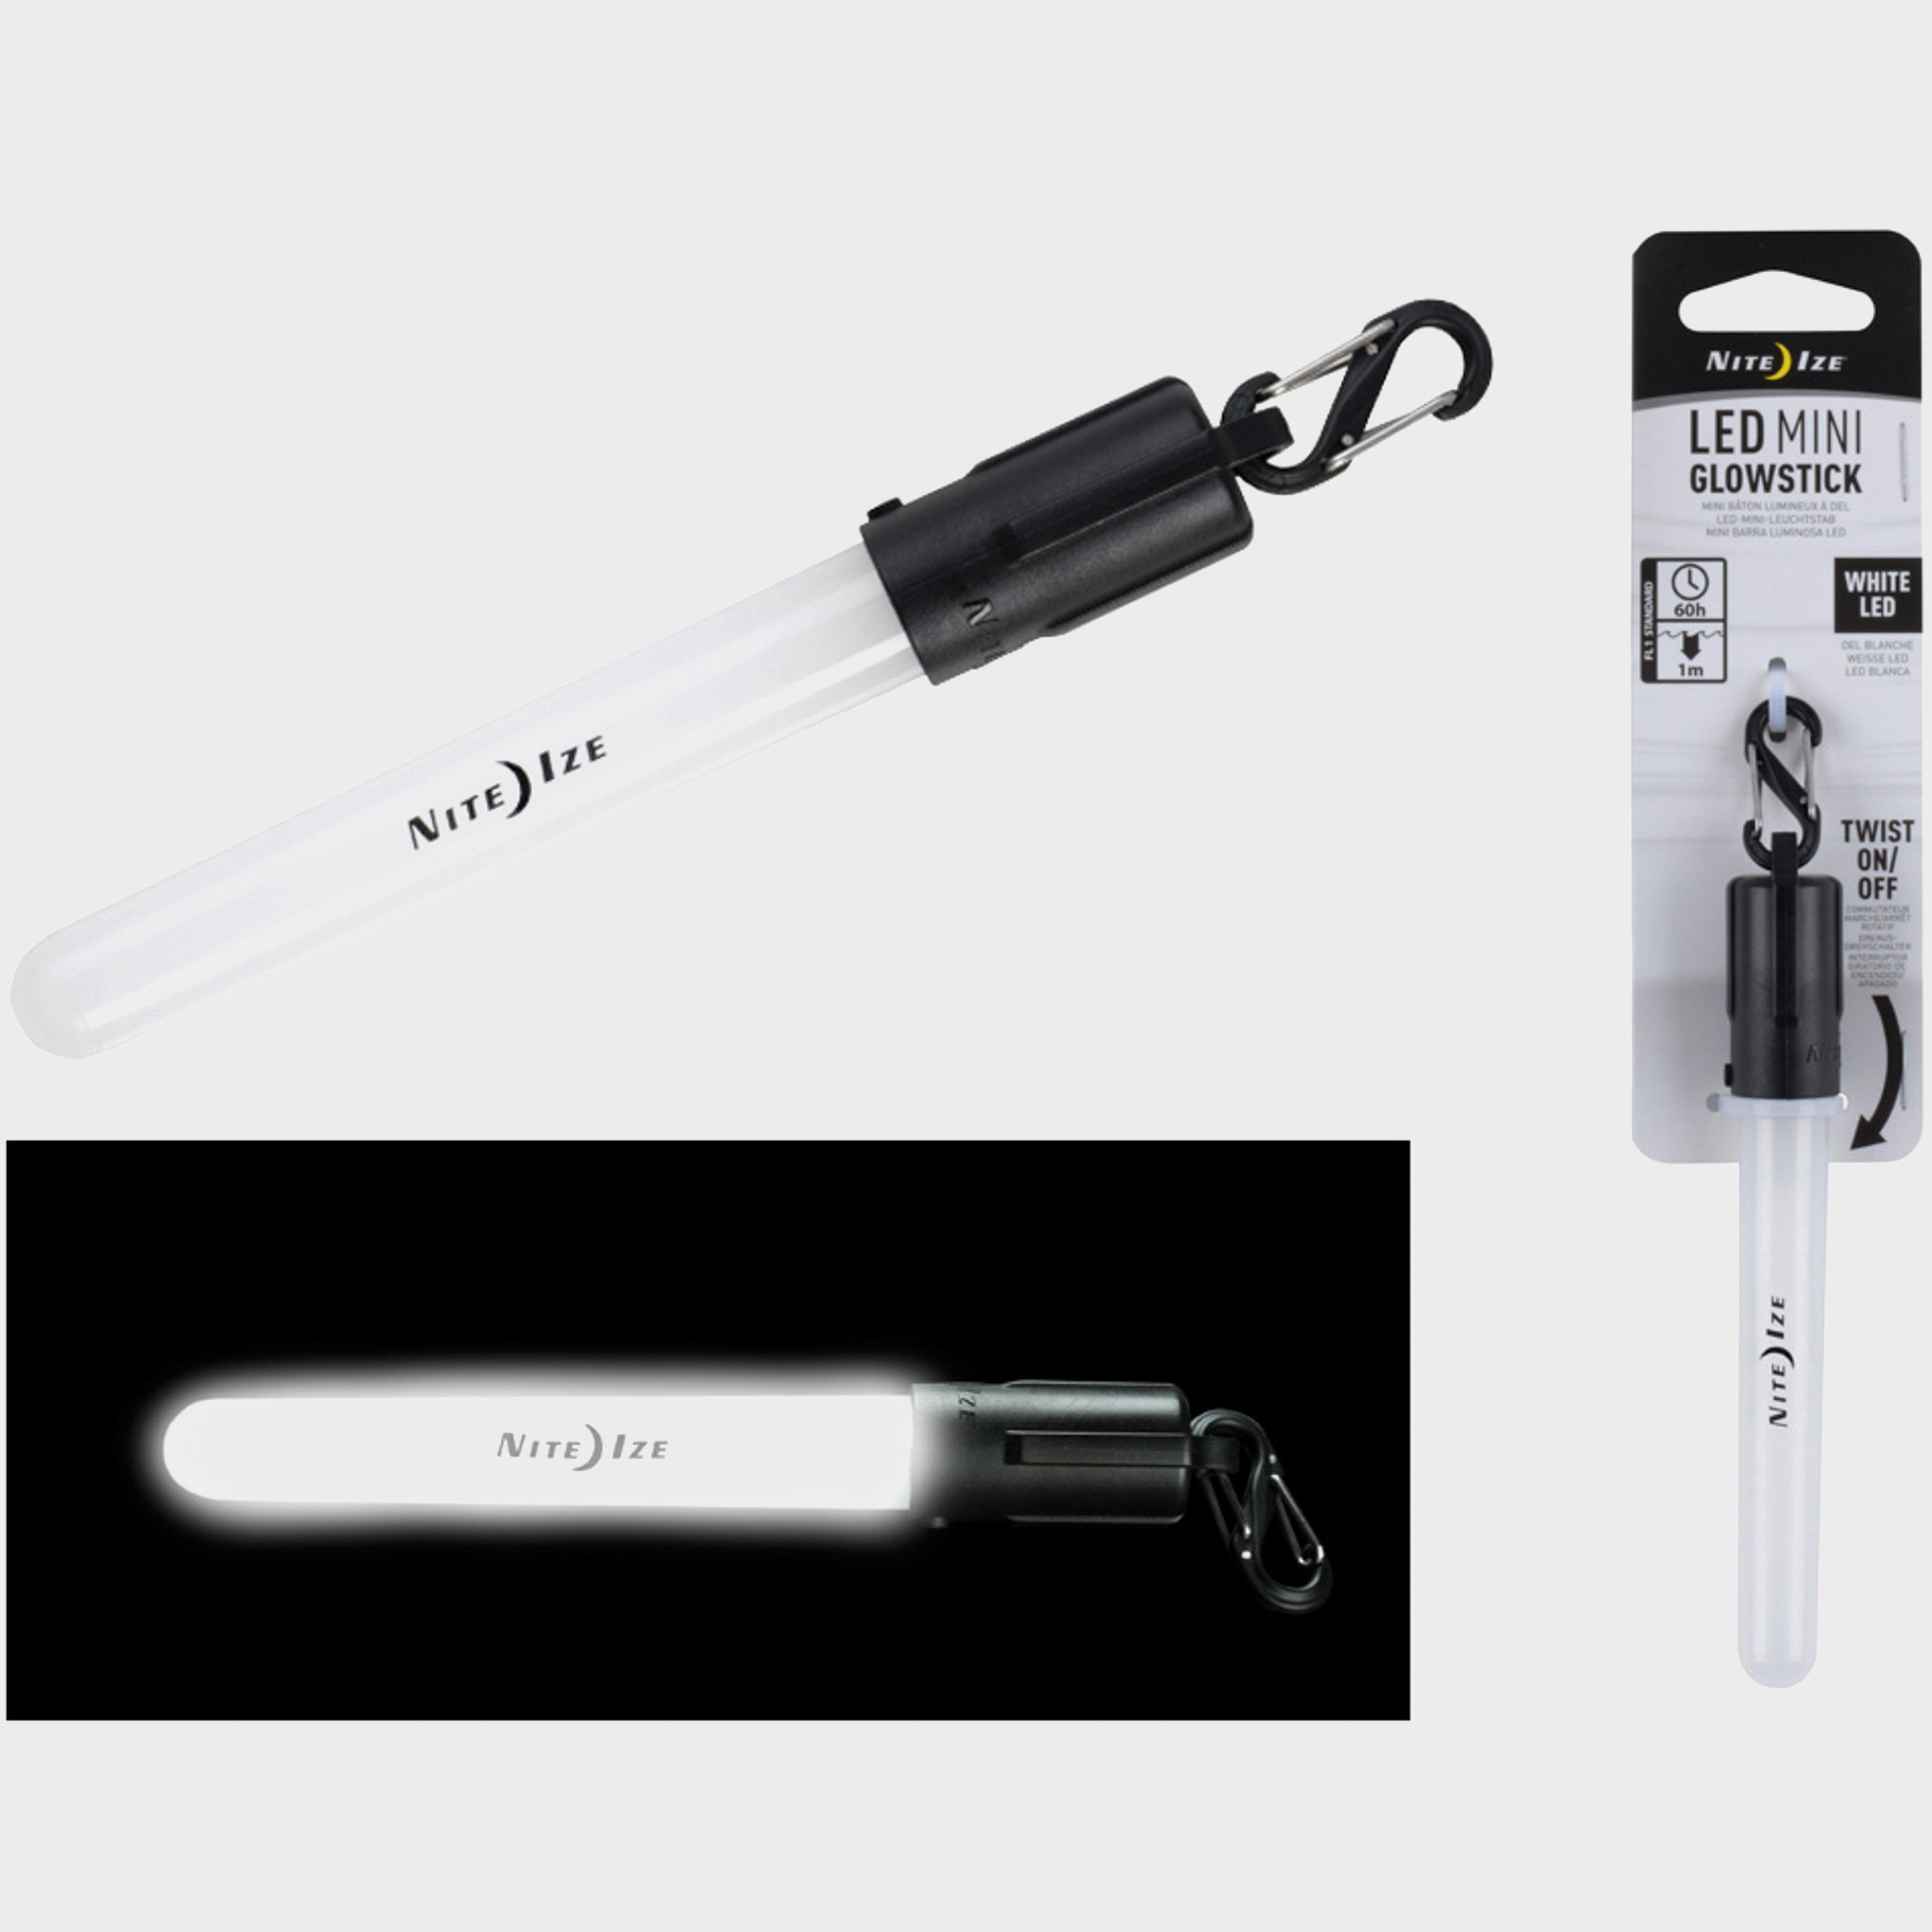 Niteize Led Mini Glowstick (white) - Black/led  Black/led